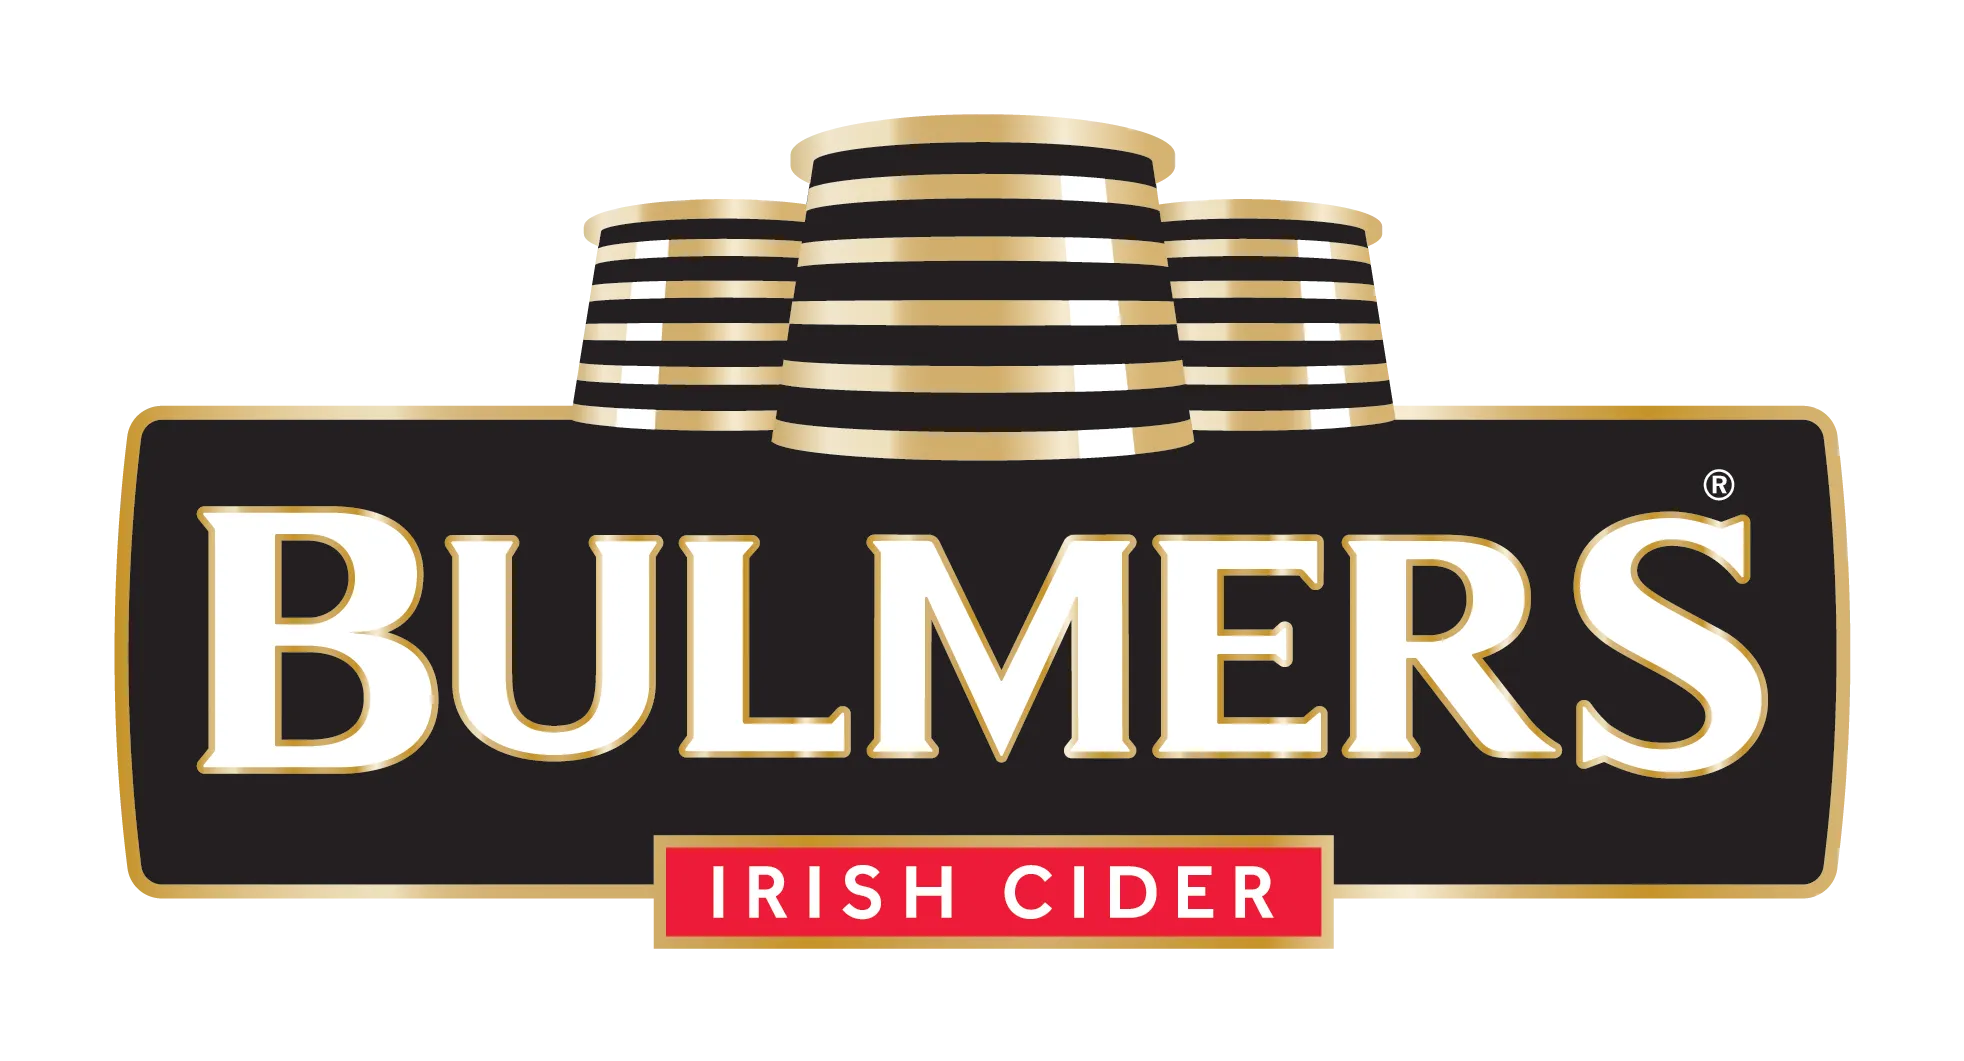 Bulmers Logo